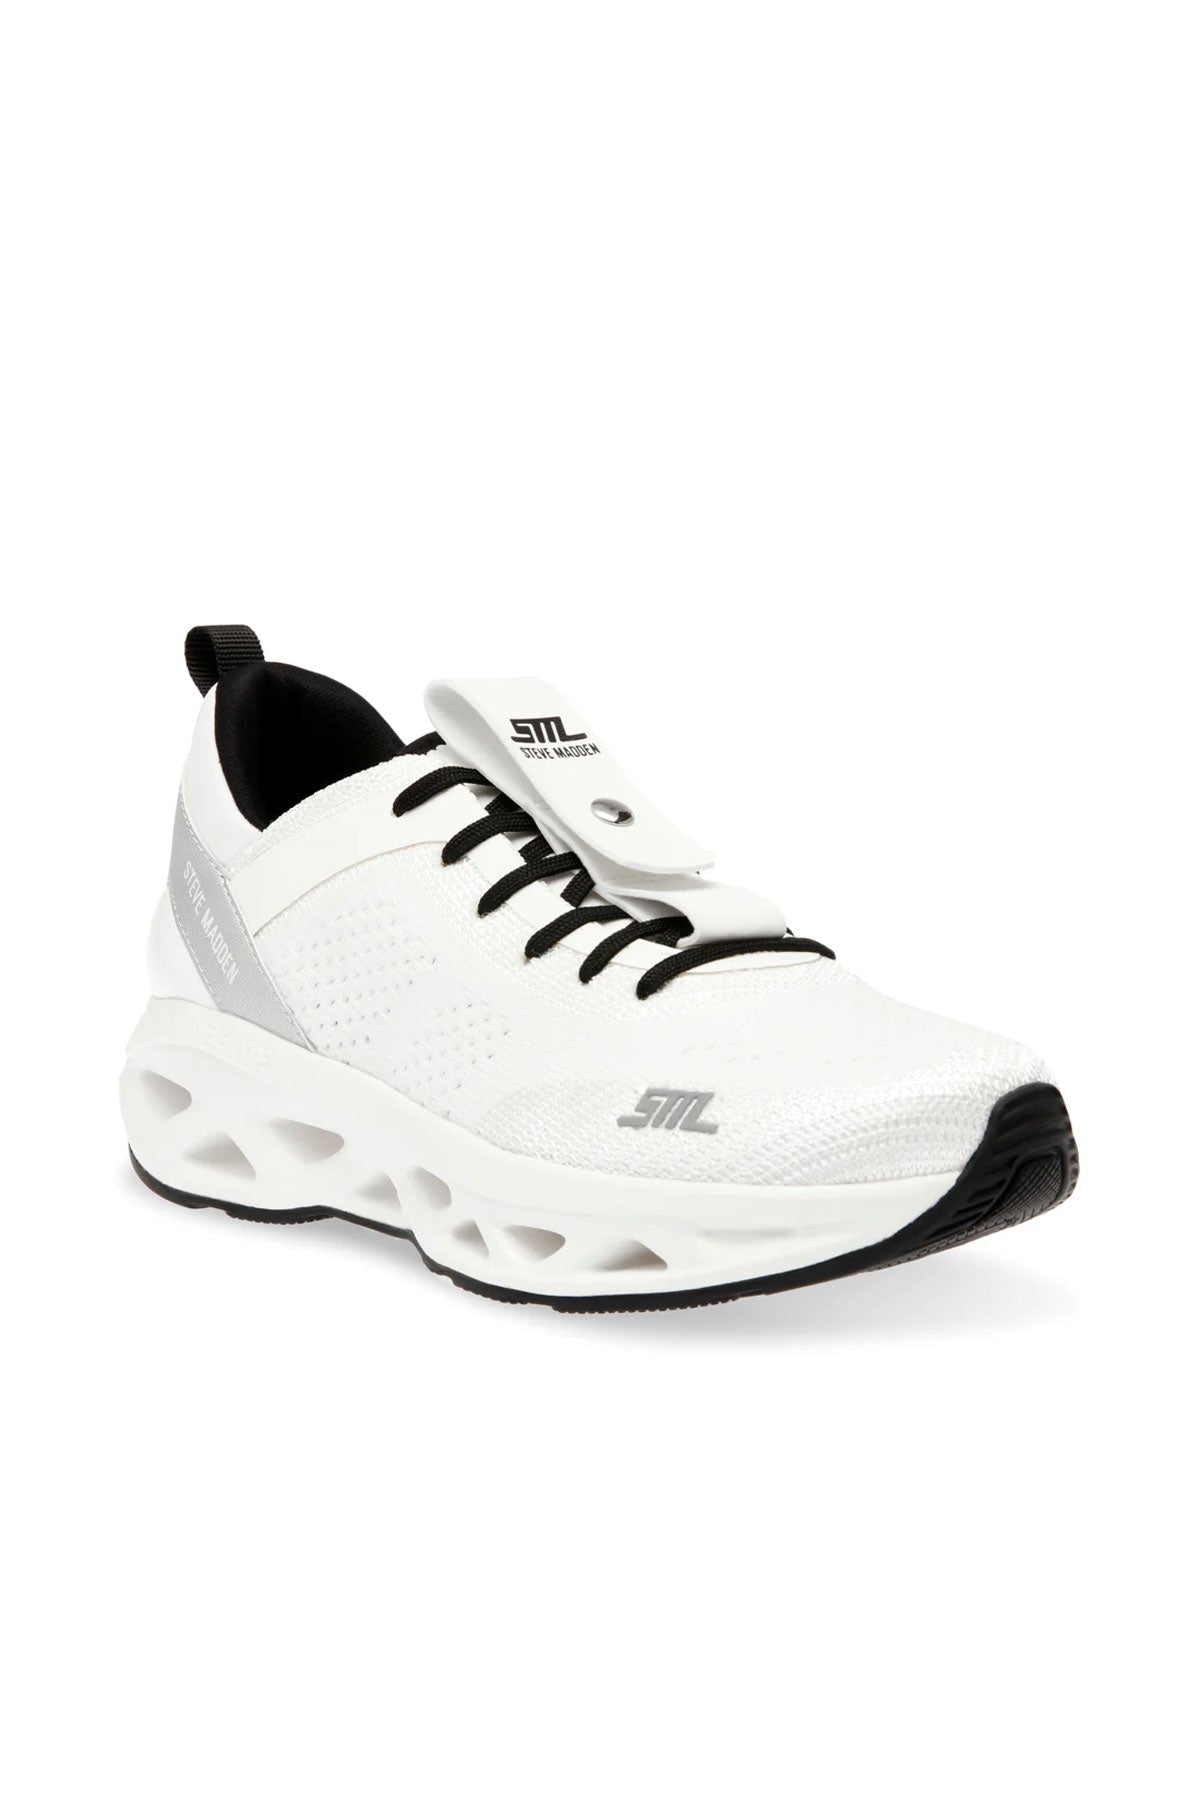 סטיב מאדן נעלי סניקרס Surge בצבע לבן לנשים-Steve Madden-36-נאקו